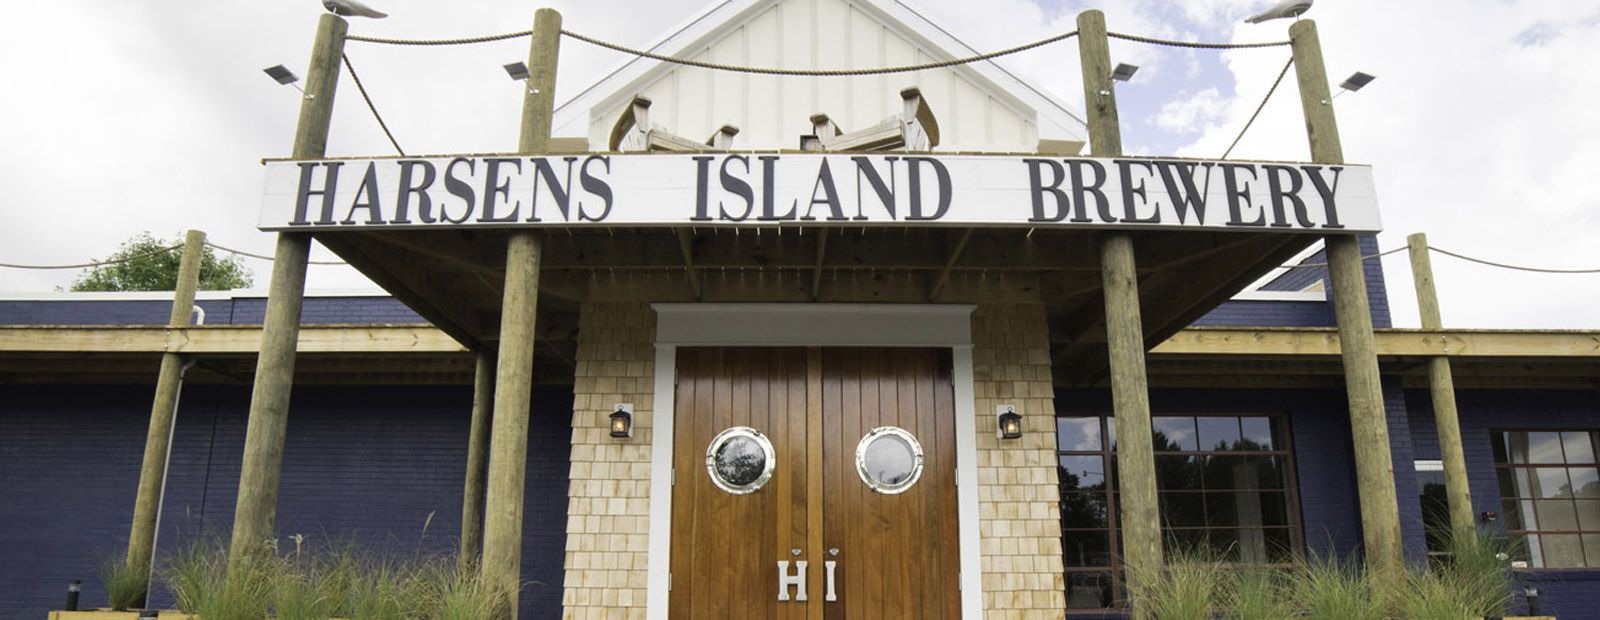 Harsens Island Brewery.